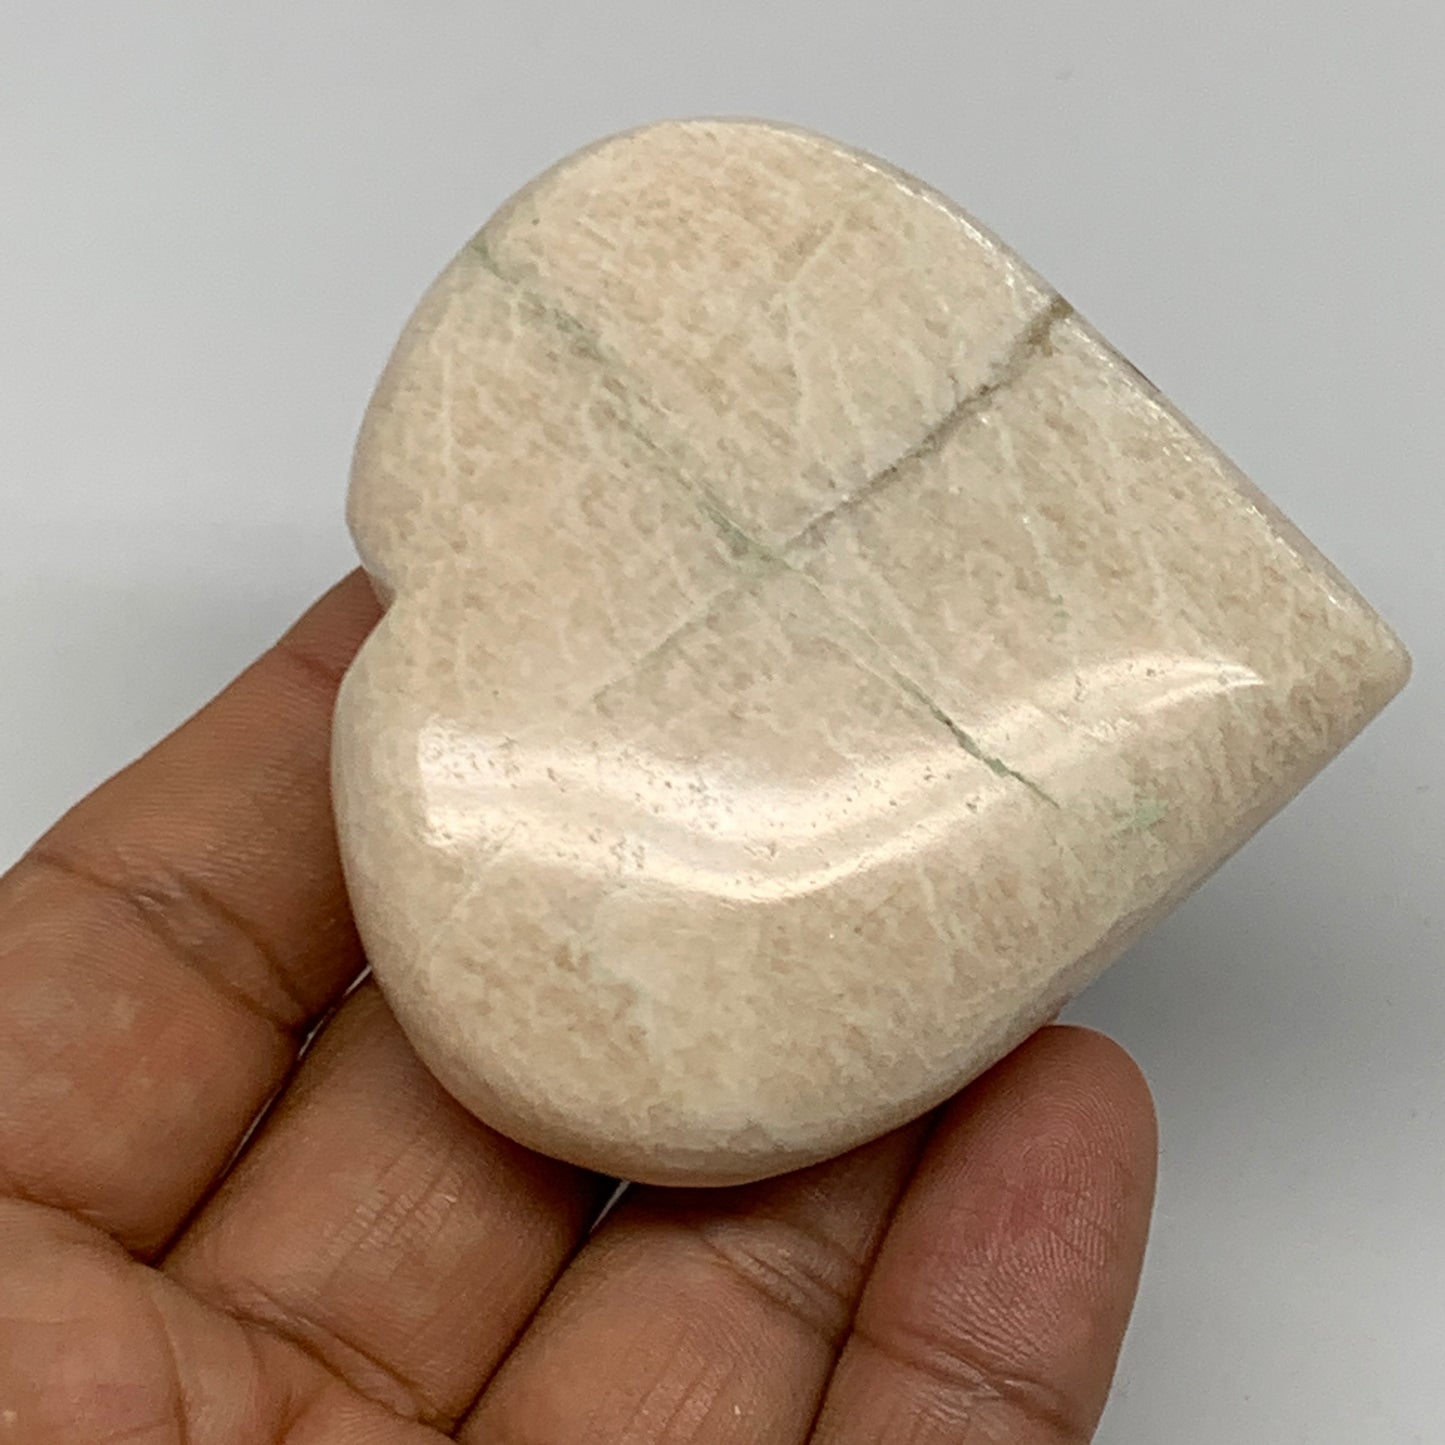 101.5g, 2.5"x2.5"x0.8", White Moonstone Heart Crystal Polished Gemstone, B22115